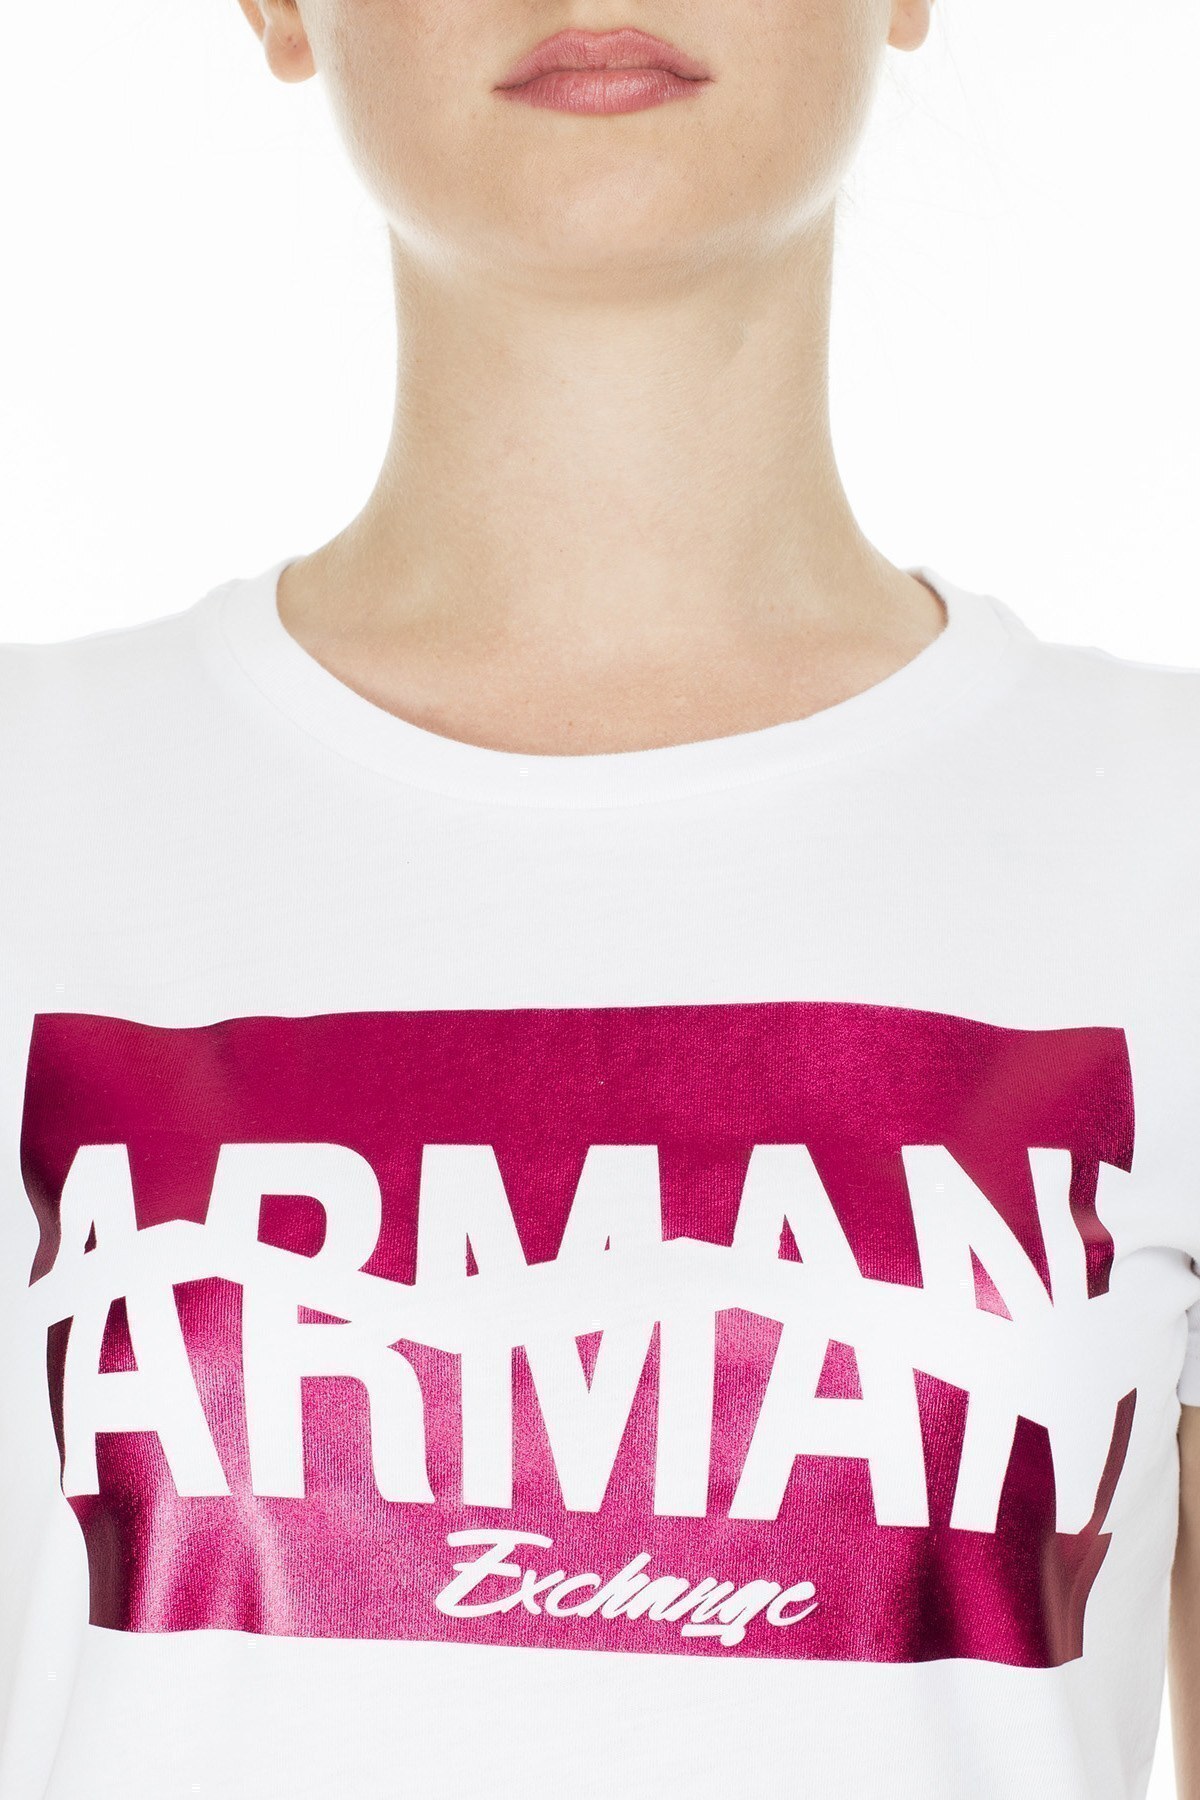 Armani Exchange Kadın T Shirt S 6GYTAB YJG3Z 1000 KIRIK BEYAZ